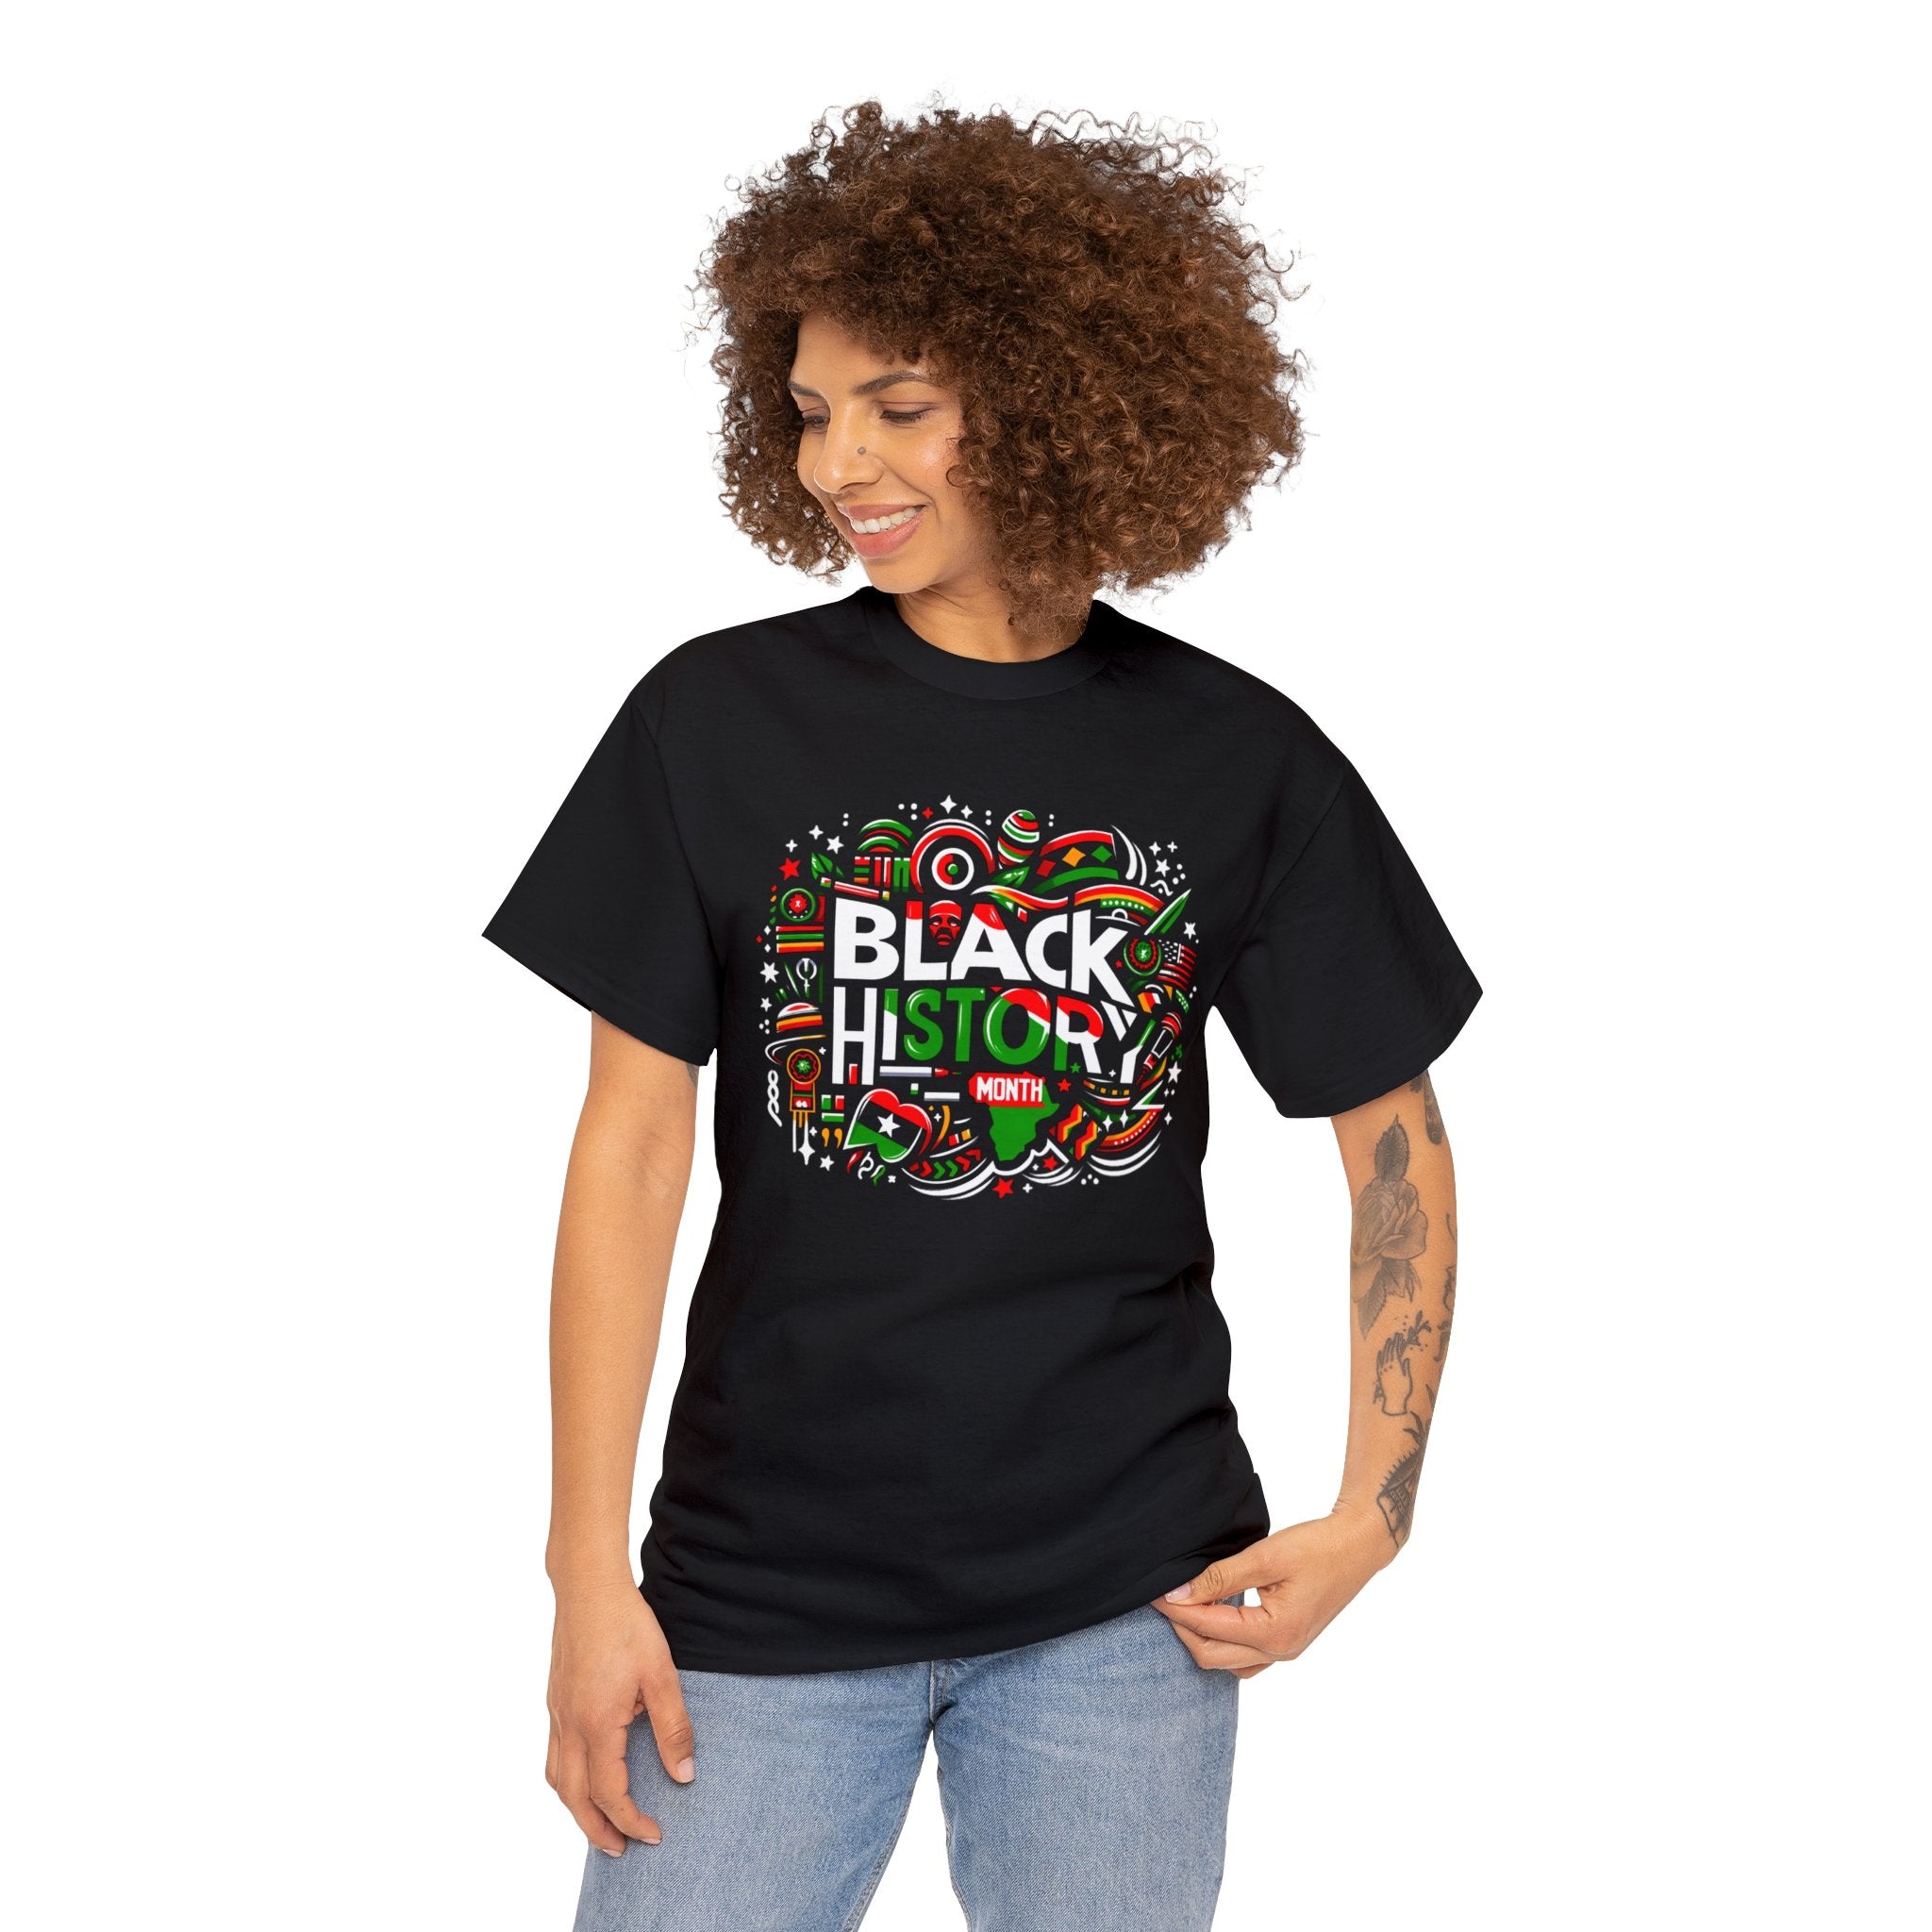 Black History Month tee shirt